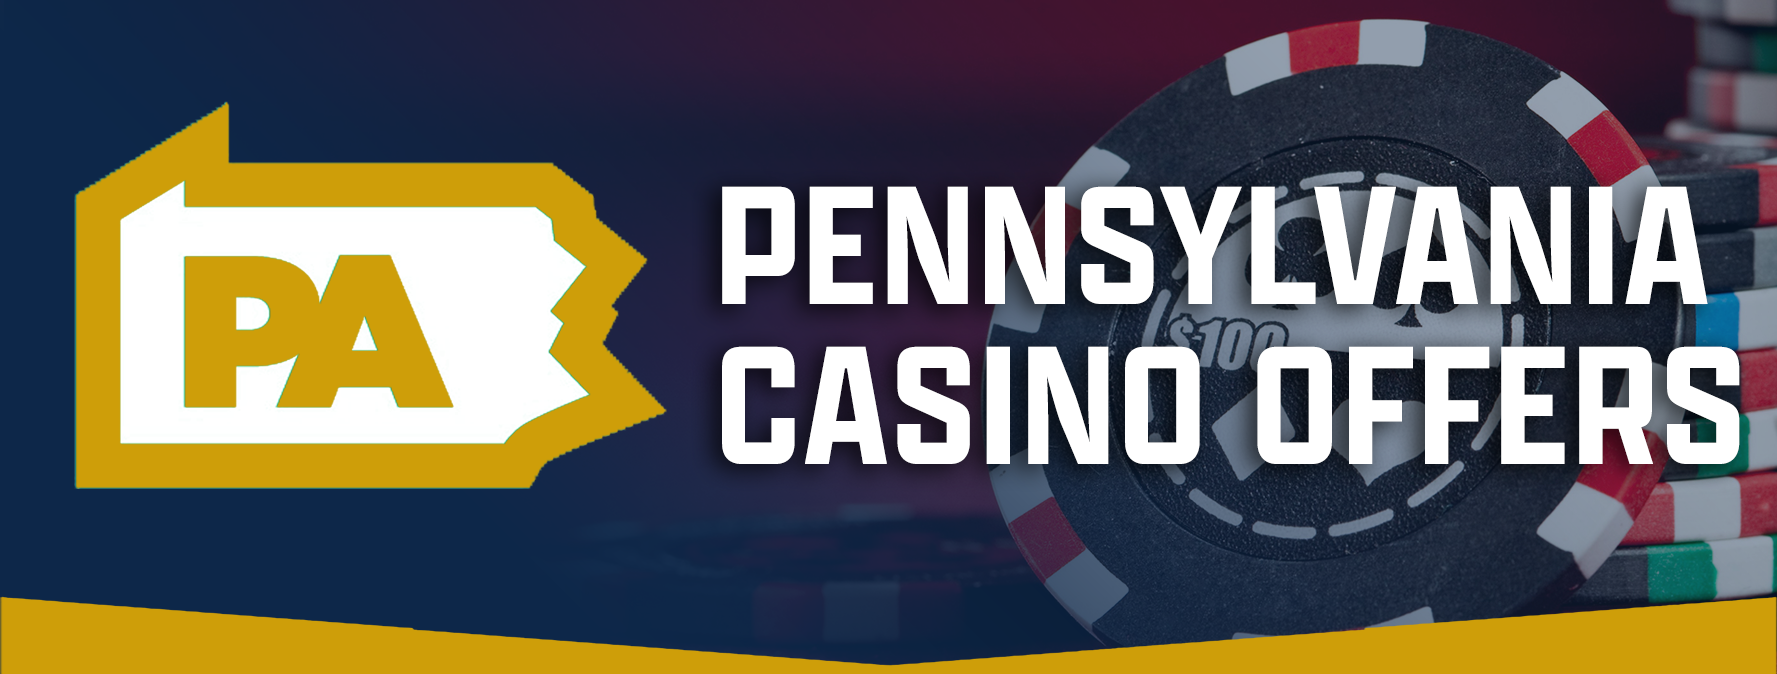 best-pennsylvania-casino-bonus-offers-every-offer-ranked